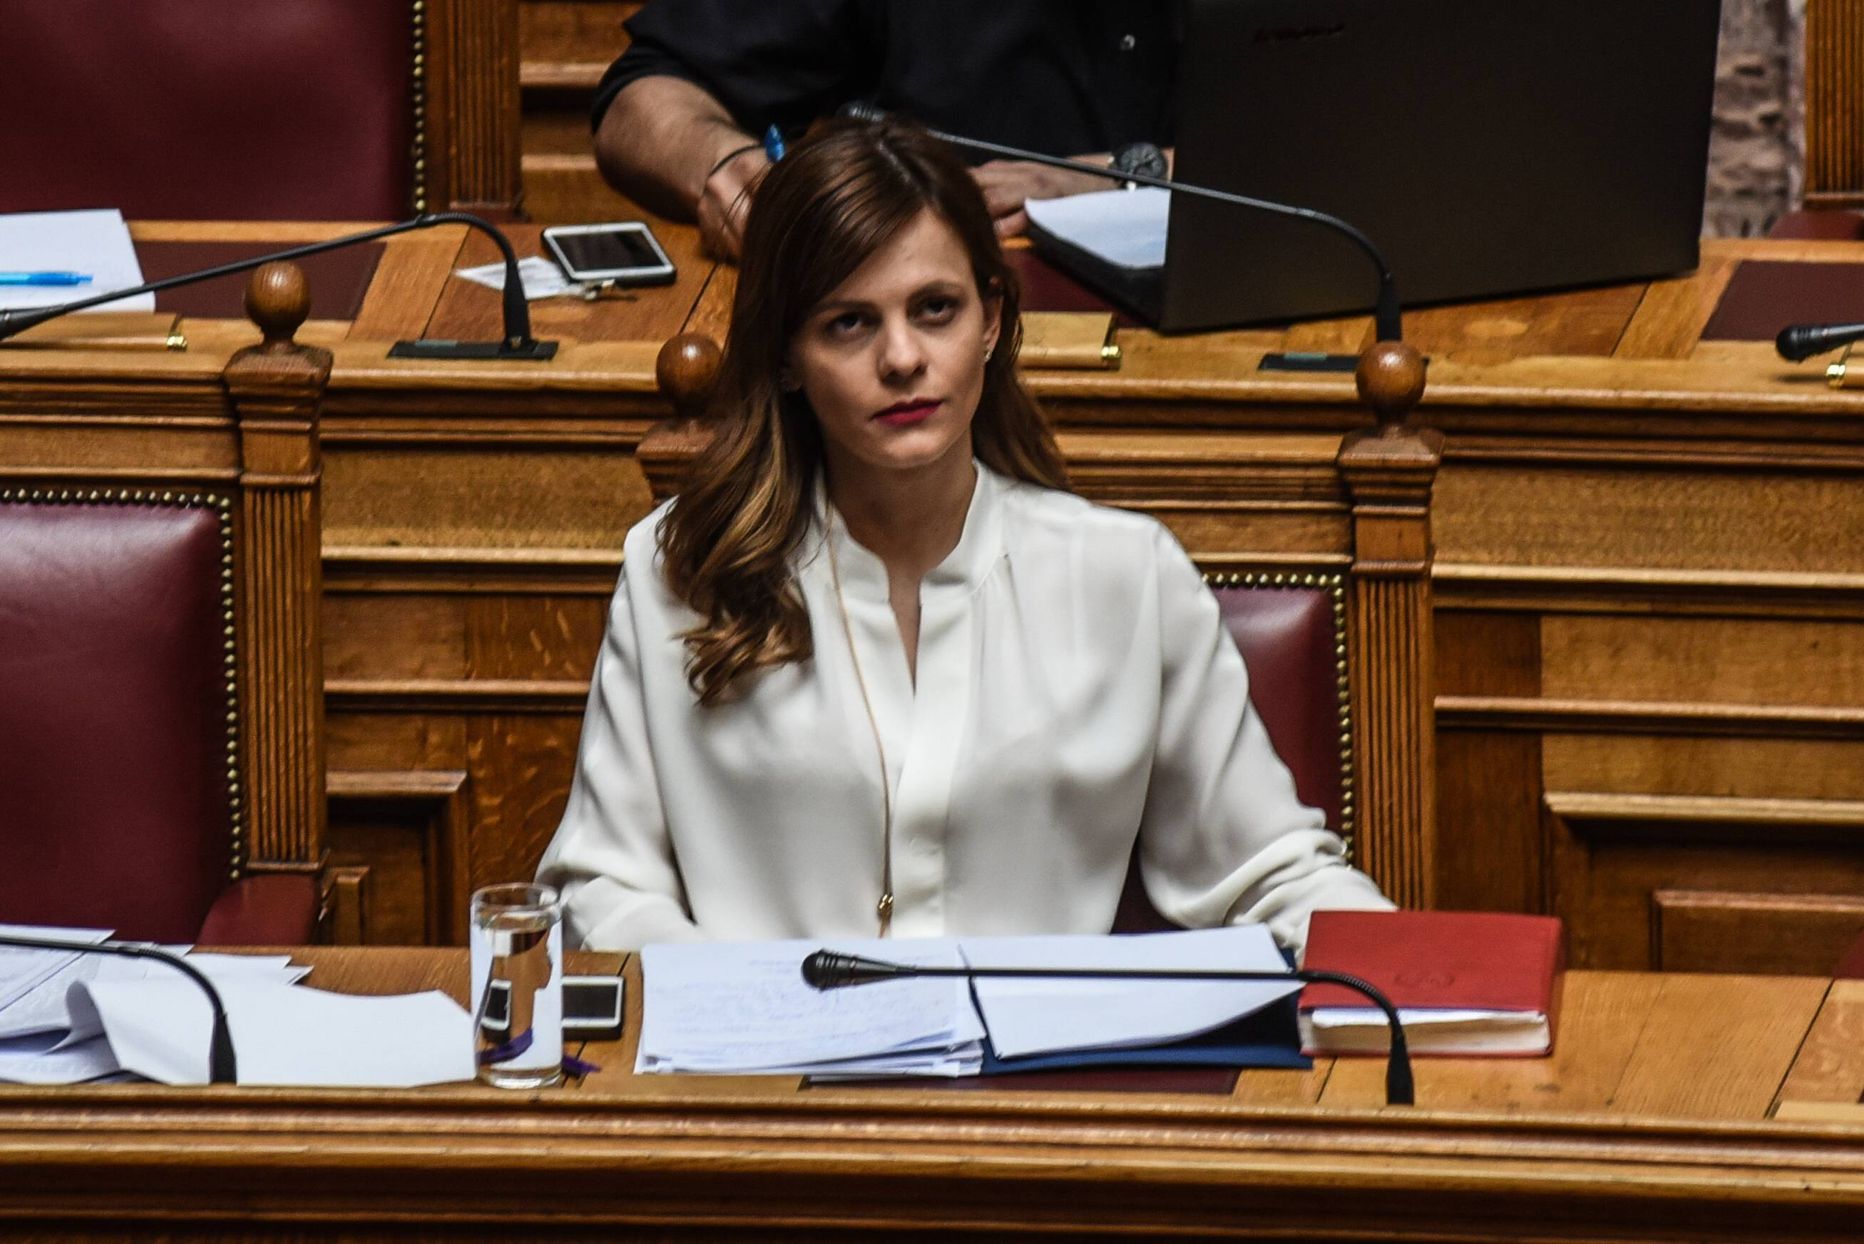 Kreeka tööminister Effi Achtsioglou parlamendiistungil